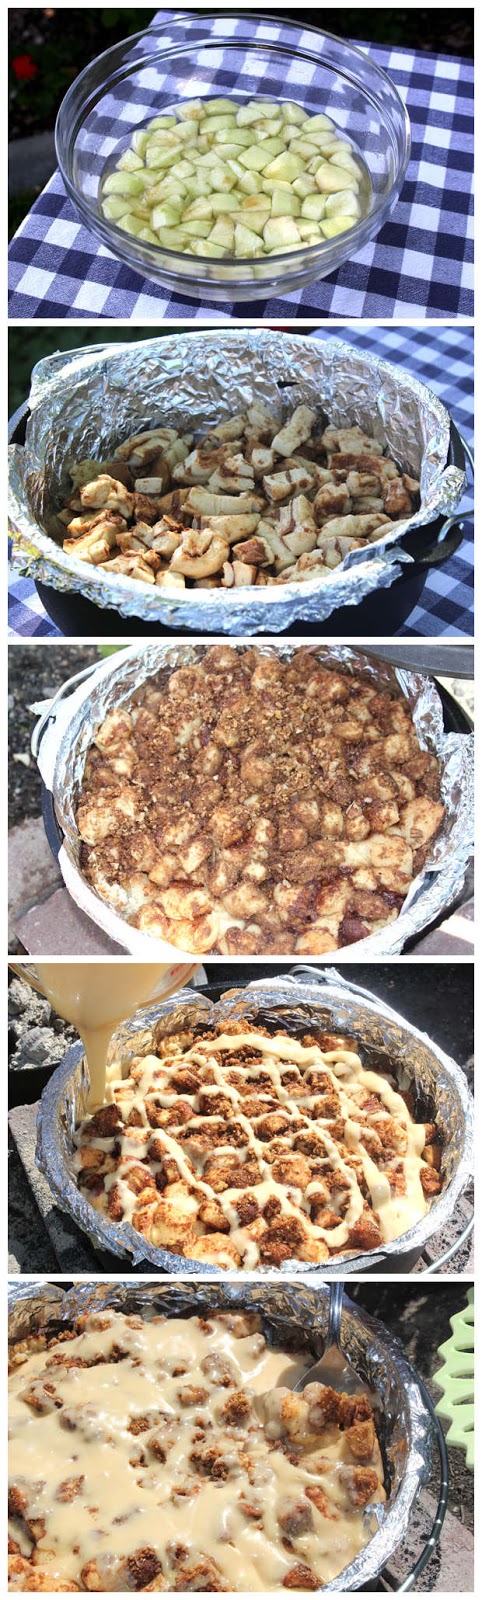 Dutch Oven Caramel Apple Pie